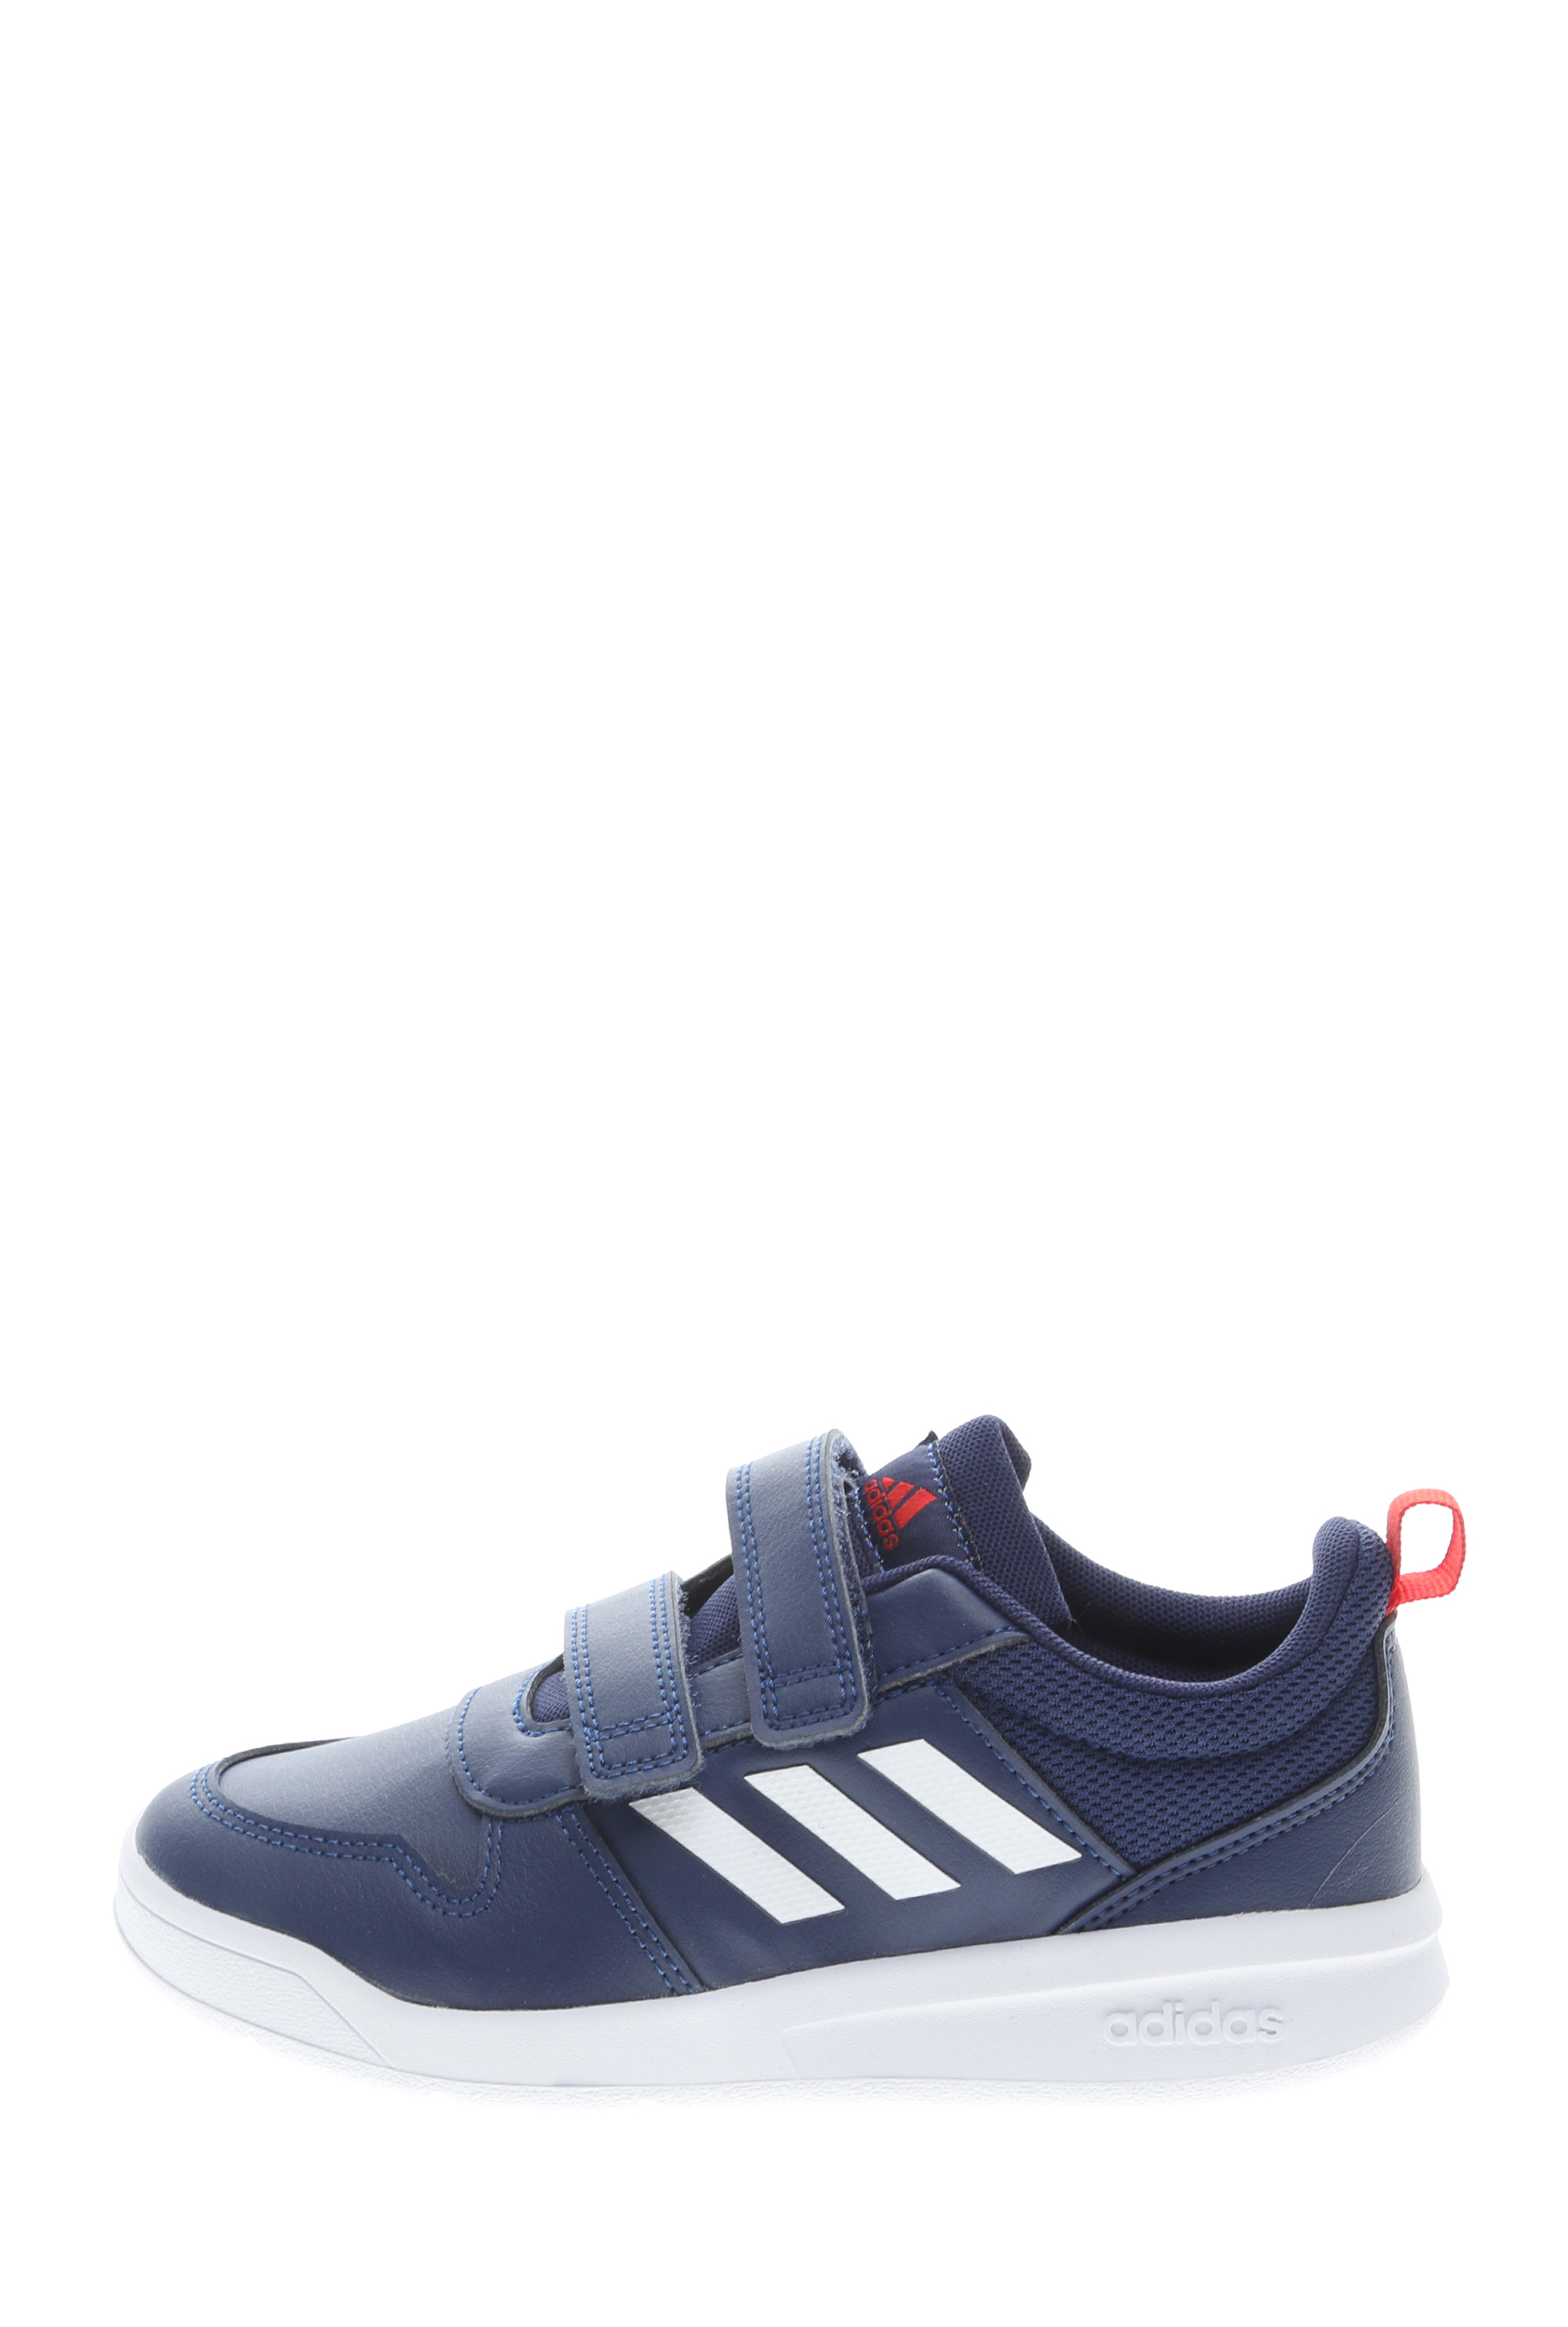 adidas Performance - Παιδικά παπούτσια adidas Performance VECTOR C μπλε Παιδικά/Boys/Παπούτσια/Αθλητικά